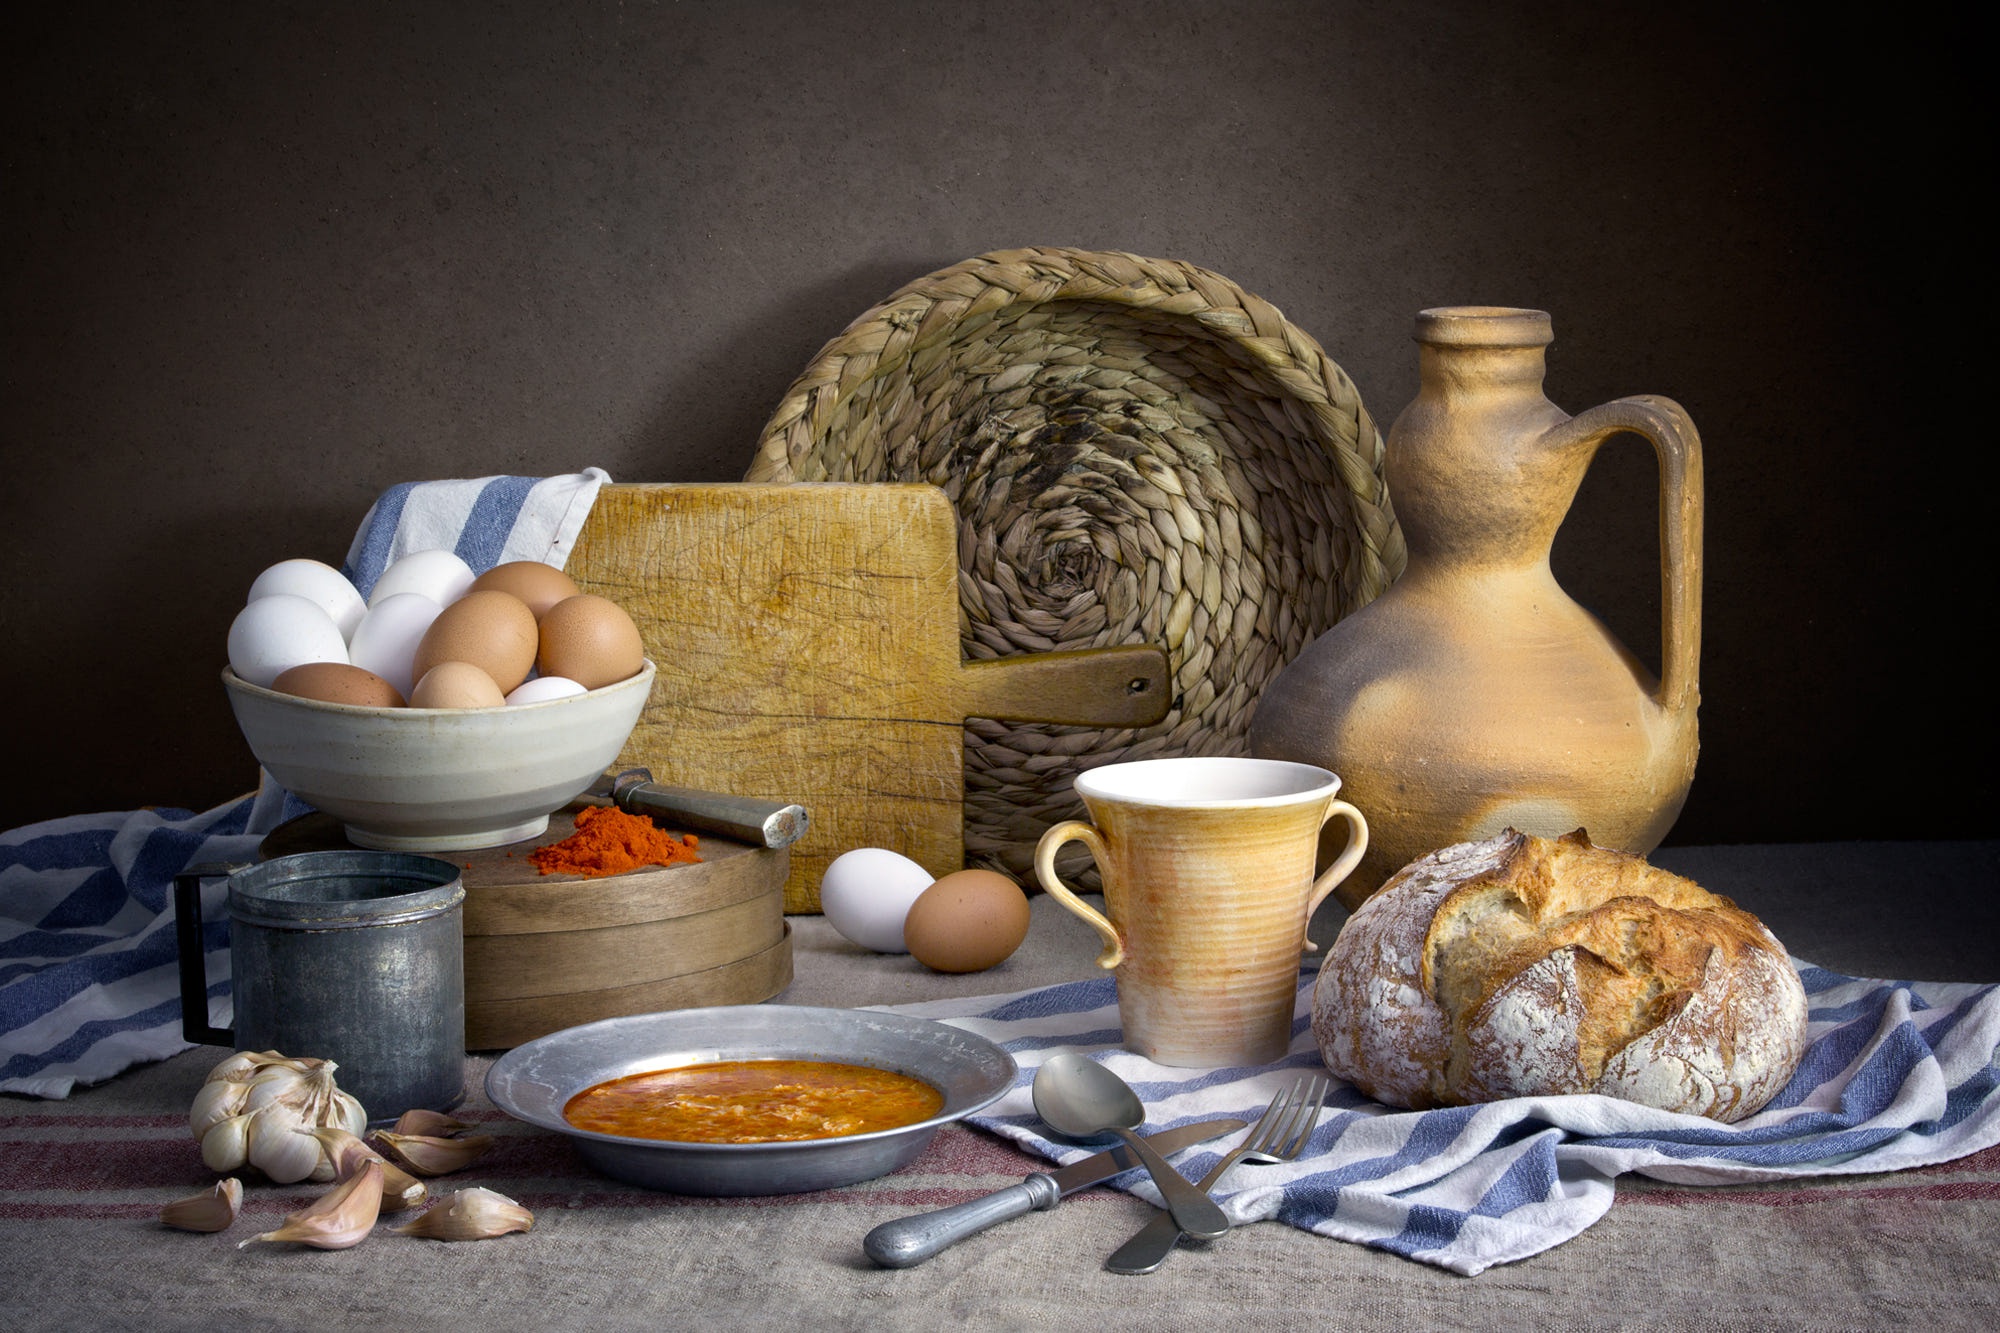 food, still life, bread, egg, plate, soup